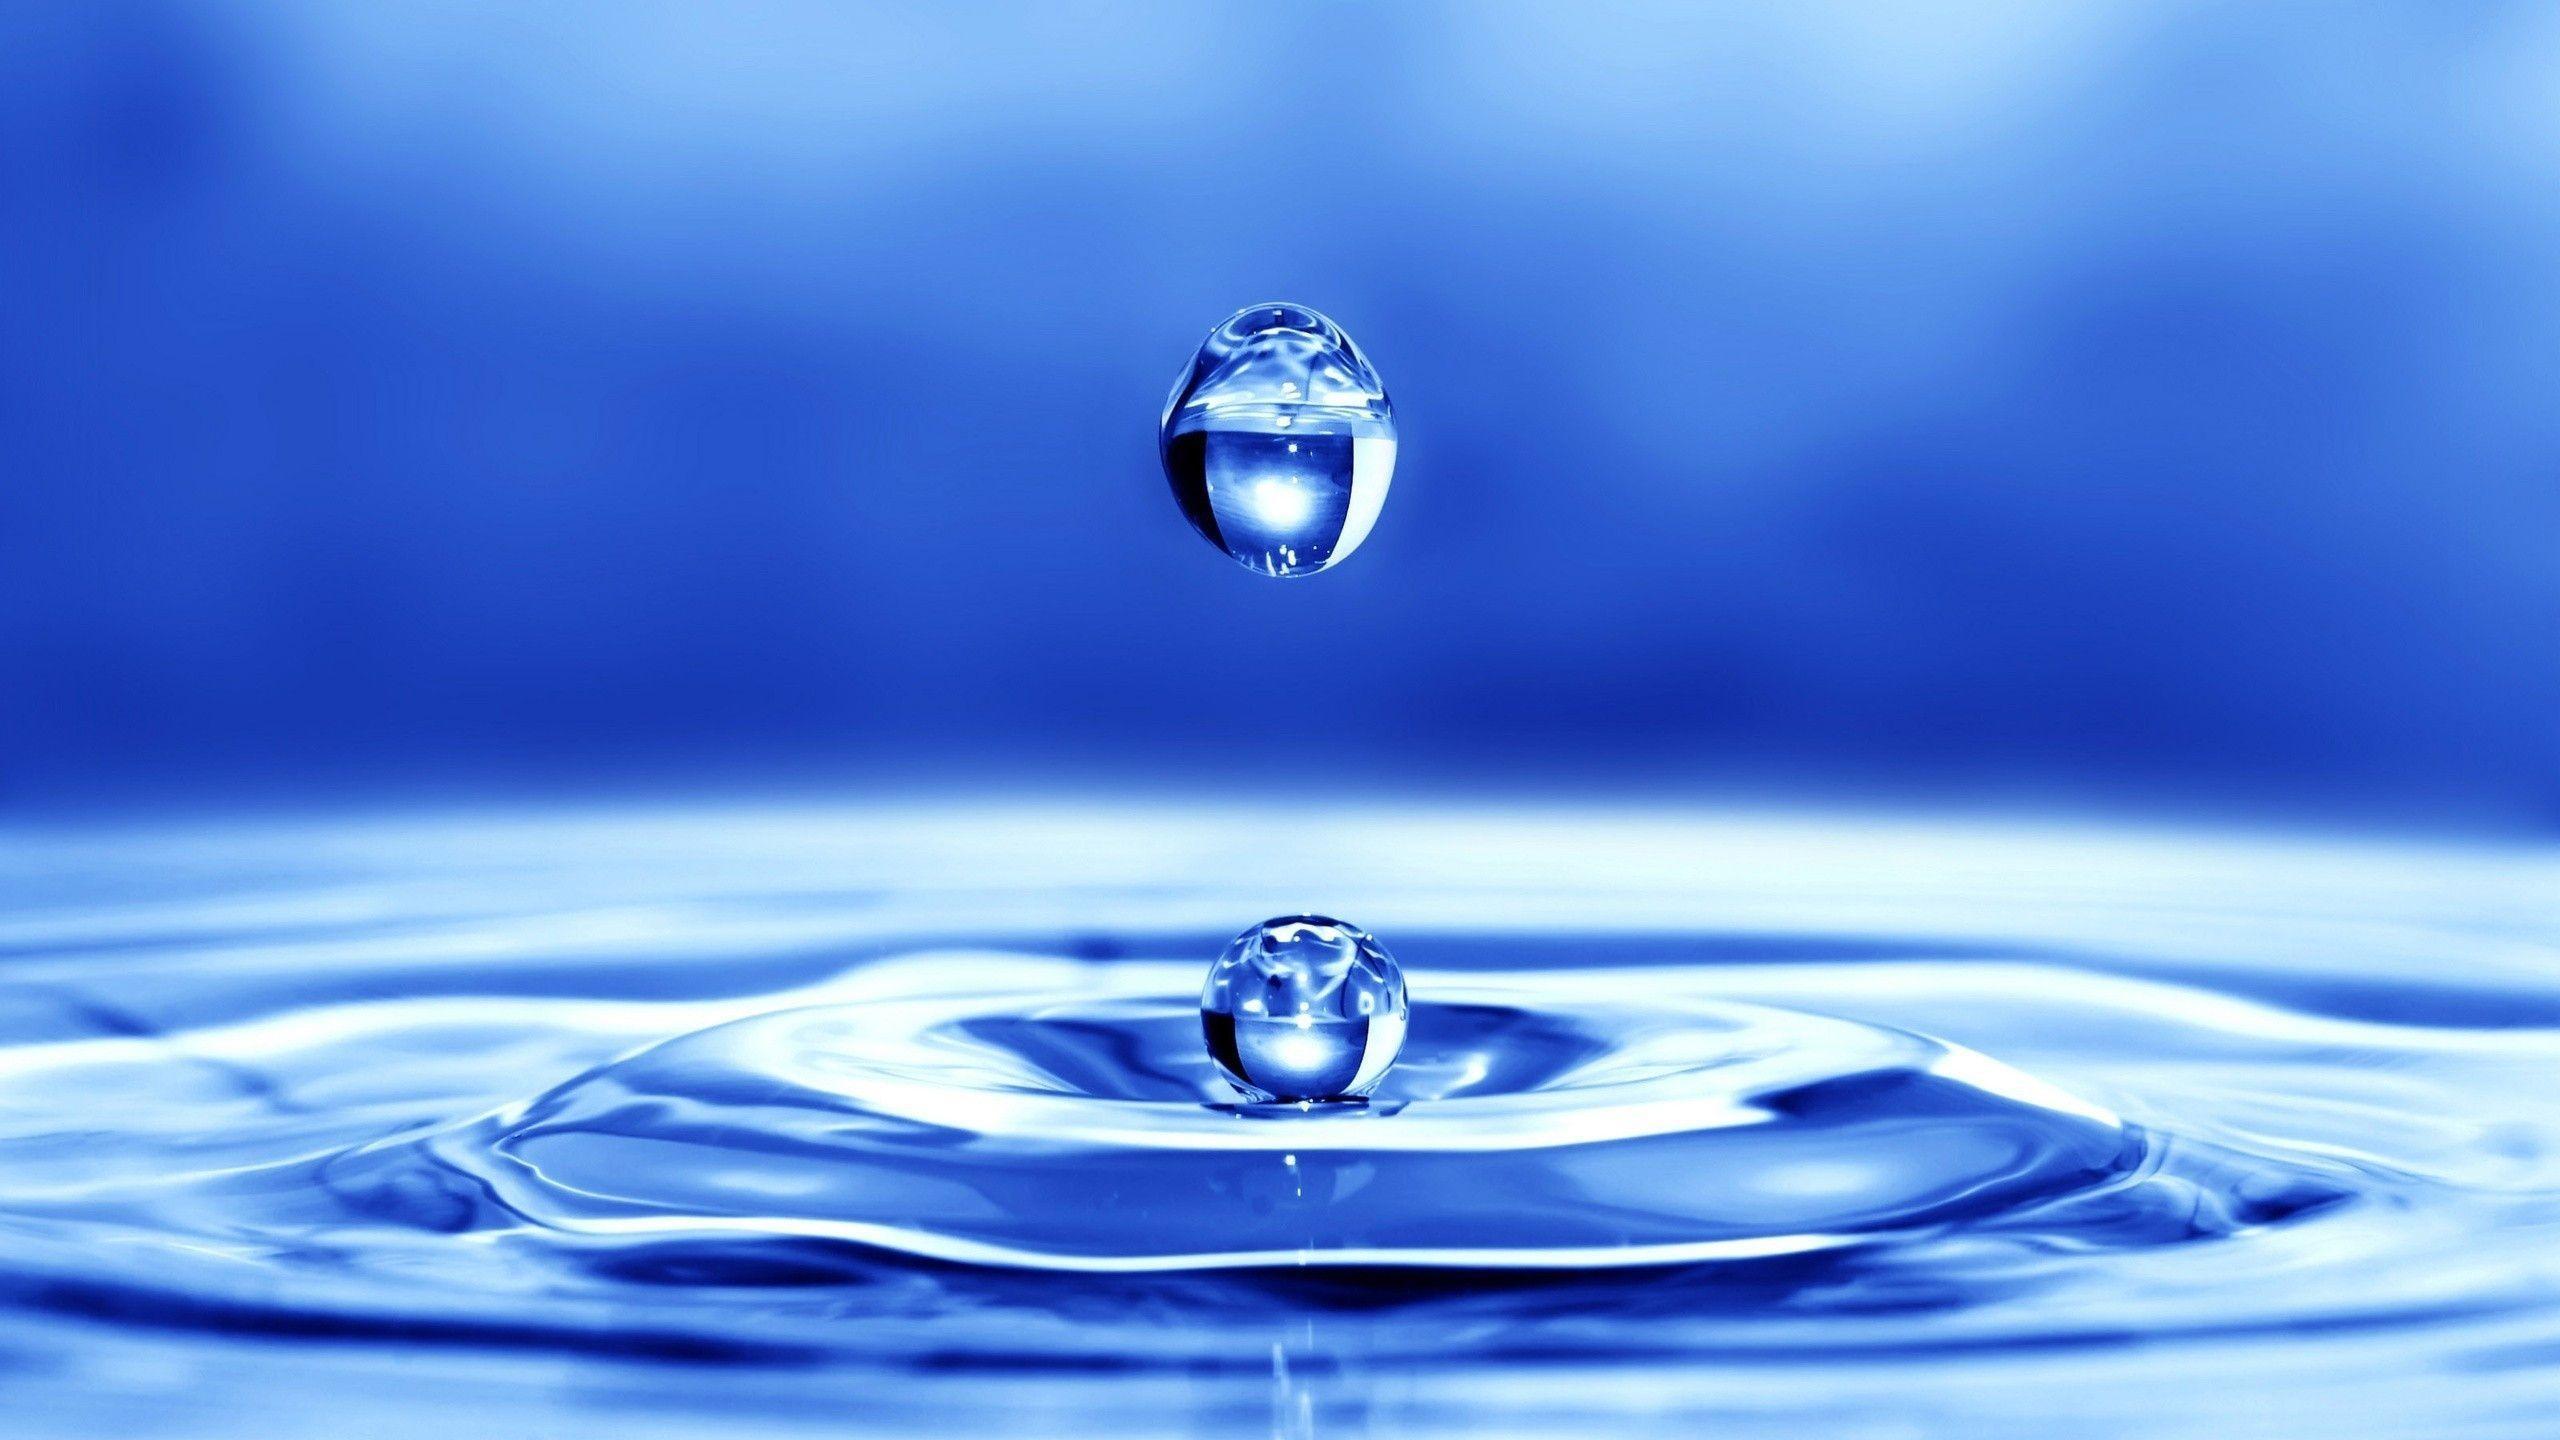 Water Drops Desktop Wallpaper. Water Drop Image